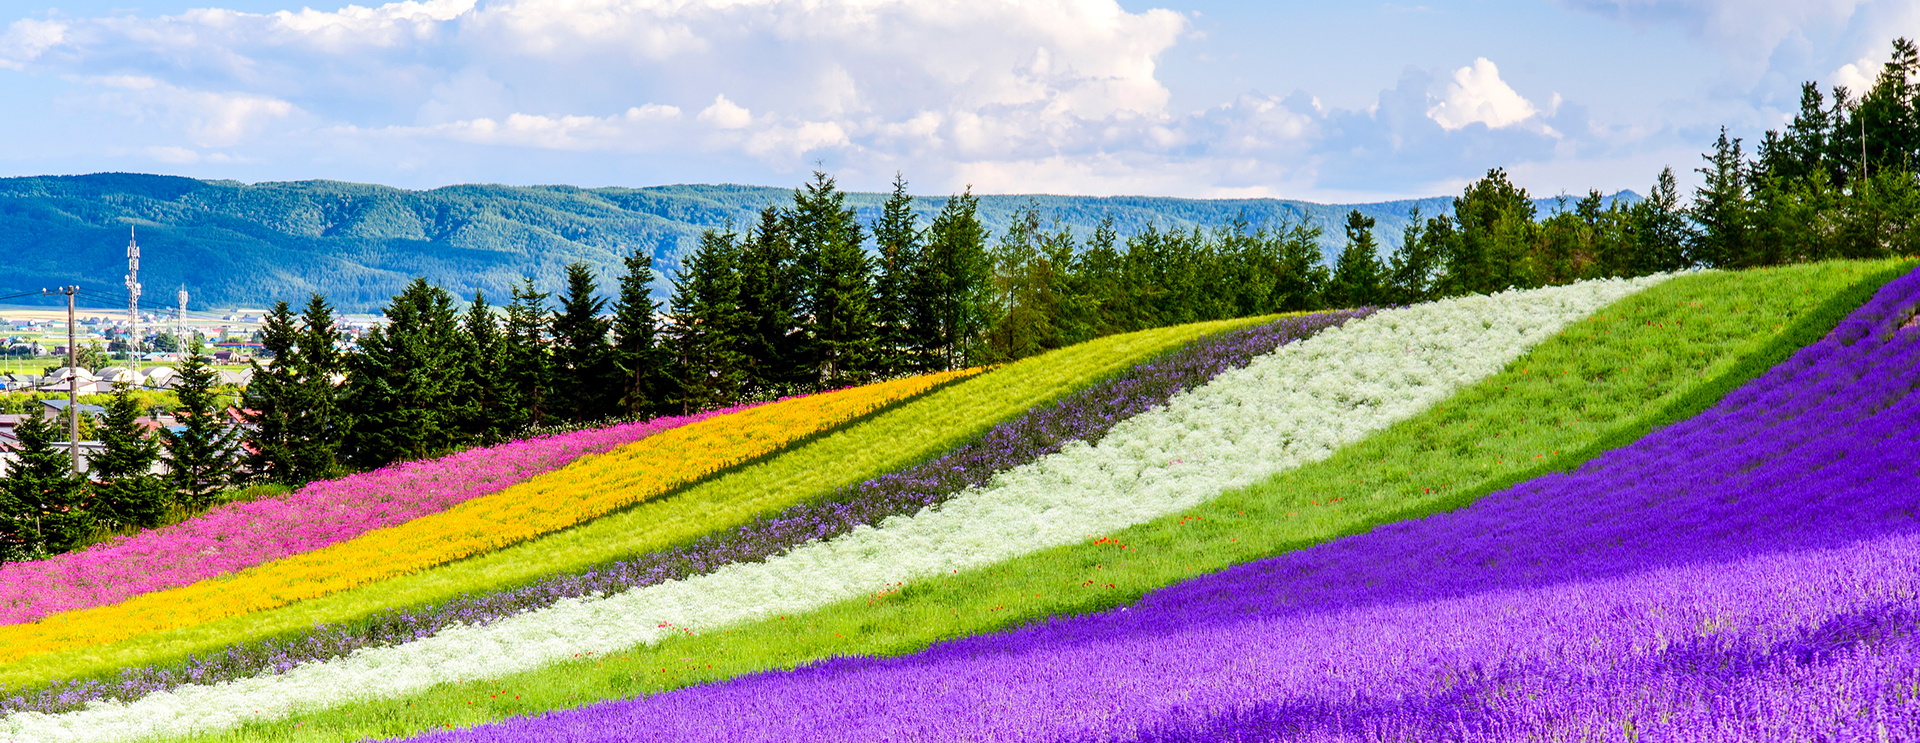 giant multicolored flower field